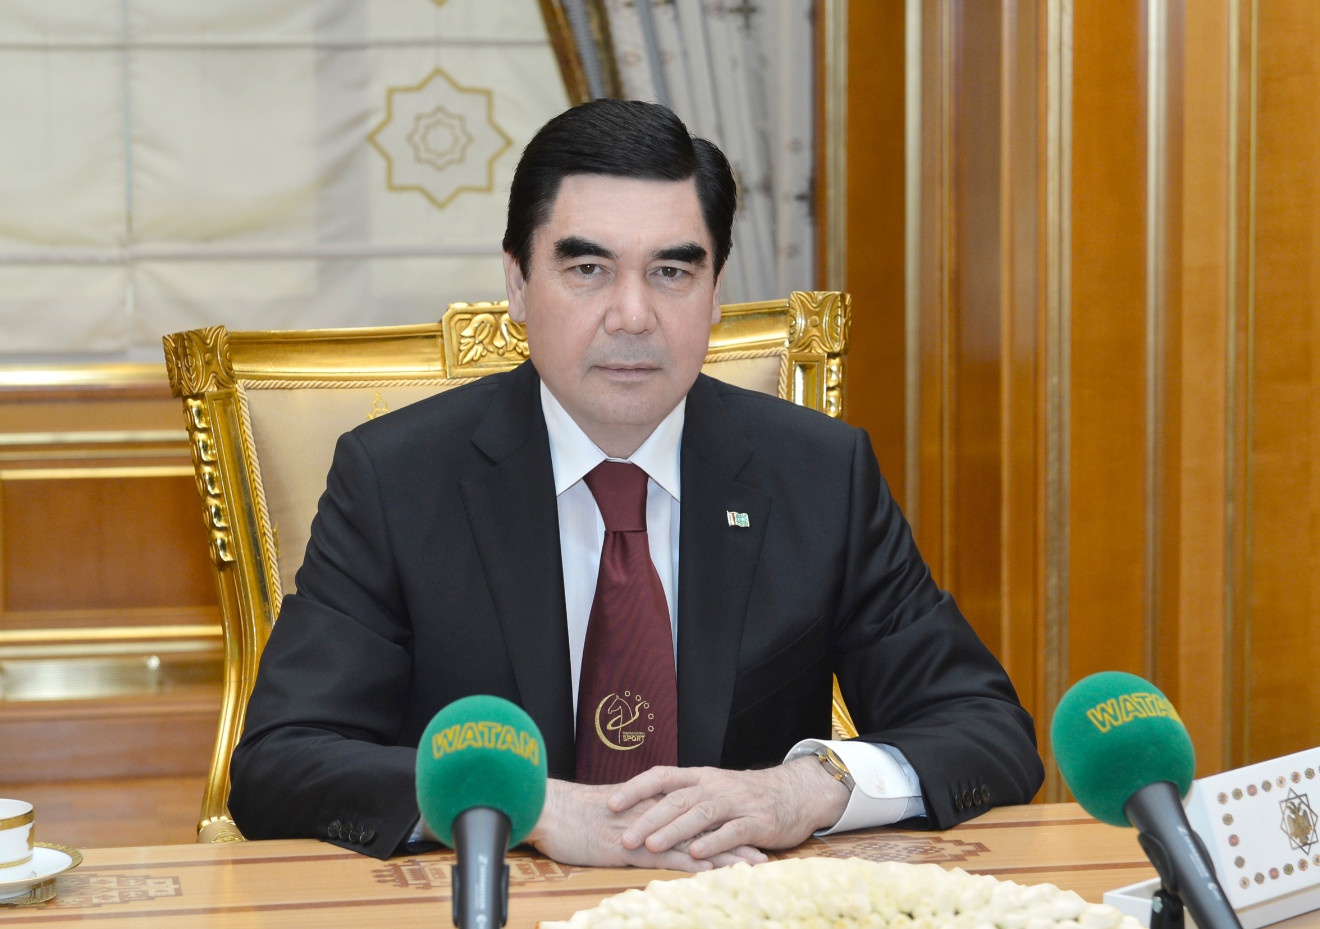 Hormatly Prezidentimiz Gurbanguly Berdimuhamedowyň Ählumumy Başlangyçlary Halkara Metbugatynyň Üns Merkezinde